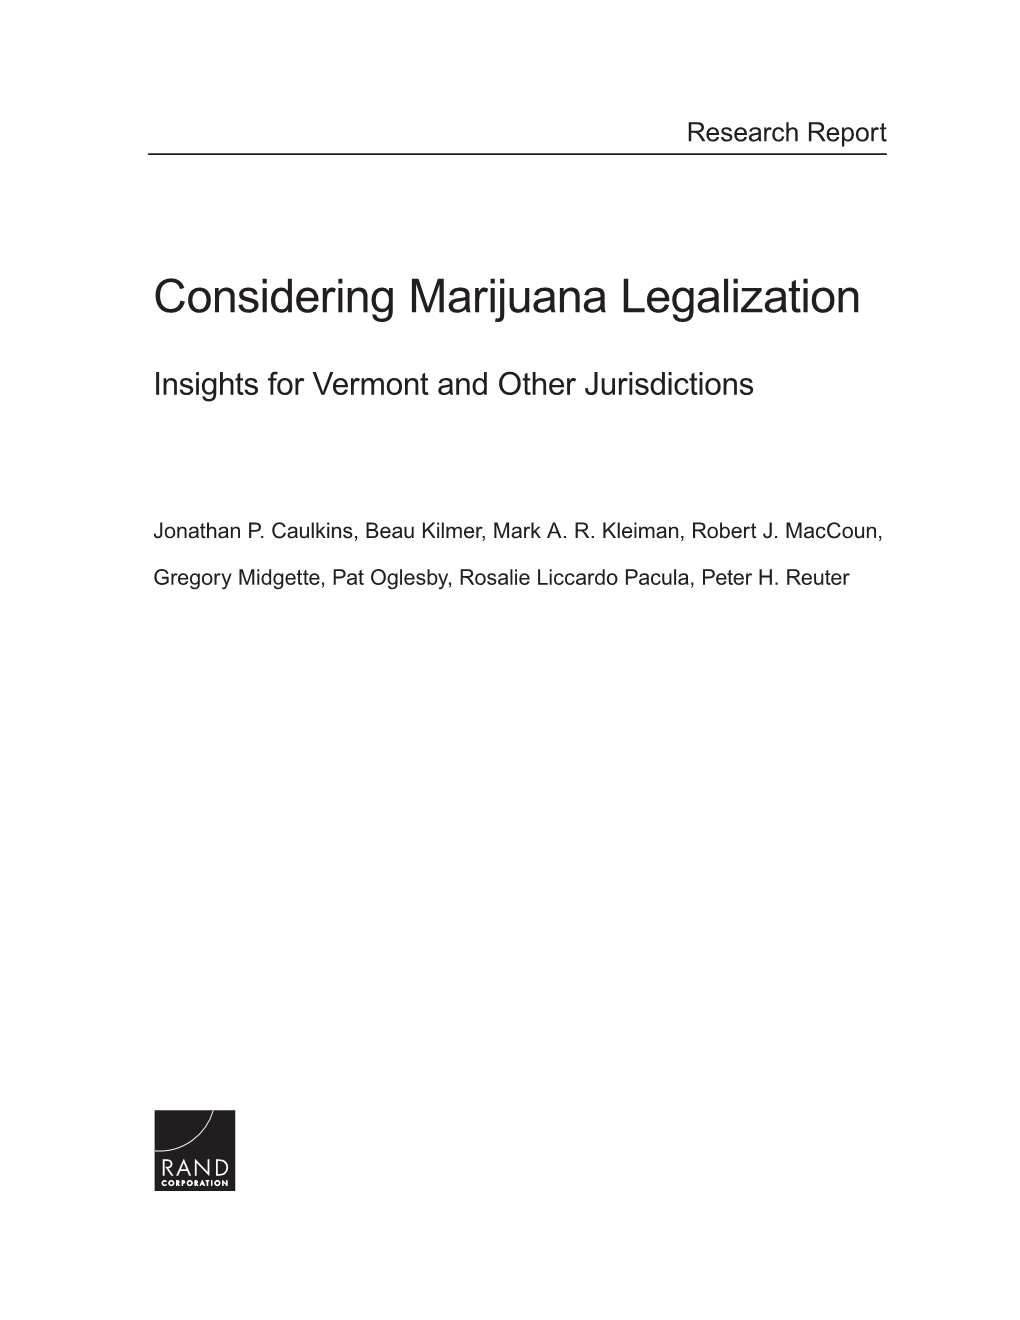 Considering Marijuana Legalization